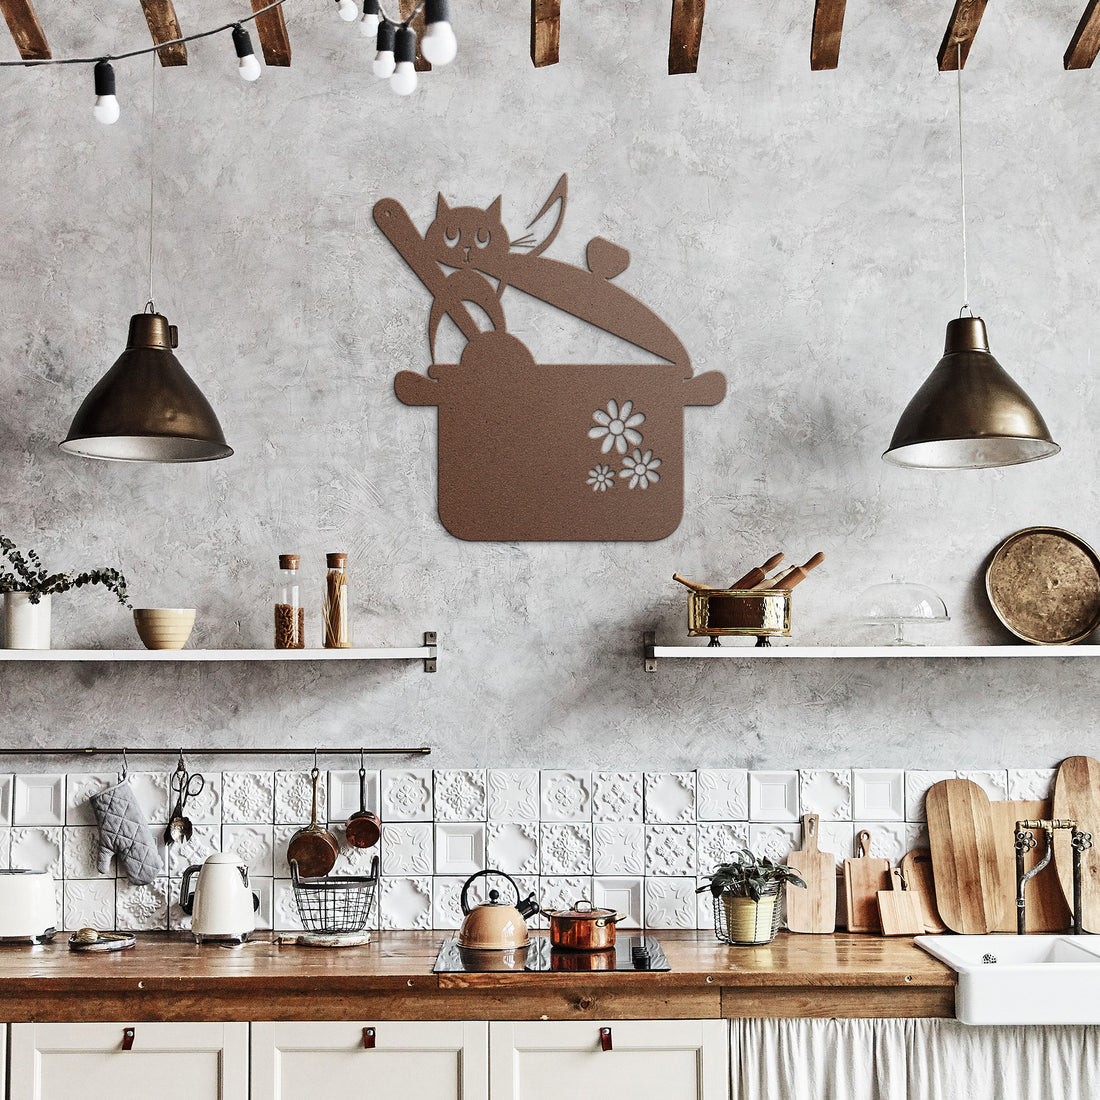 Atomic Cat, Retro Kitchen Wall Art, Mod Daisy Pot, Quirky Cat, Housewarming, New Home Gift Idea